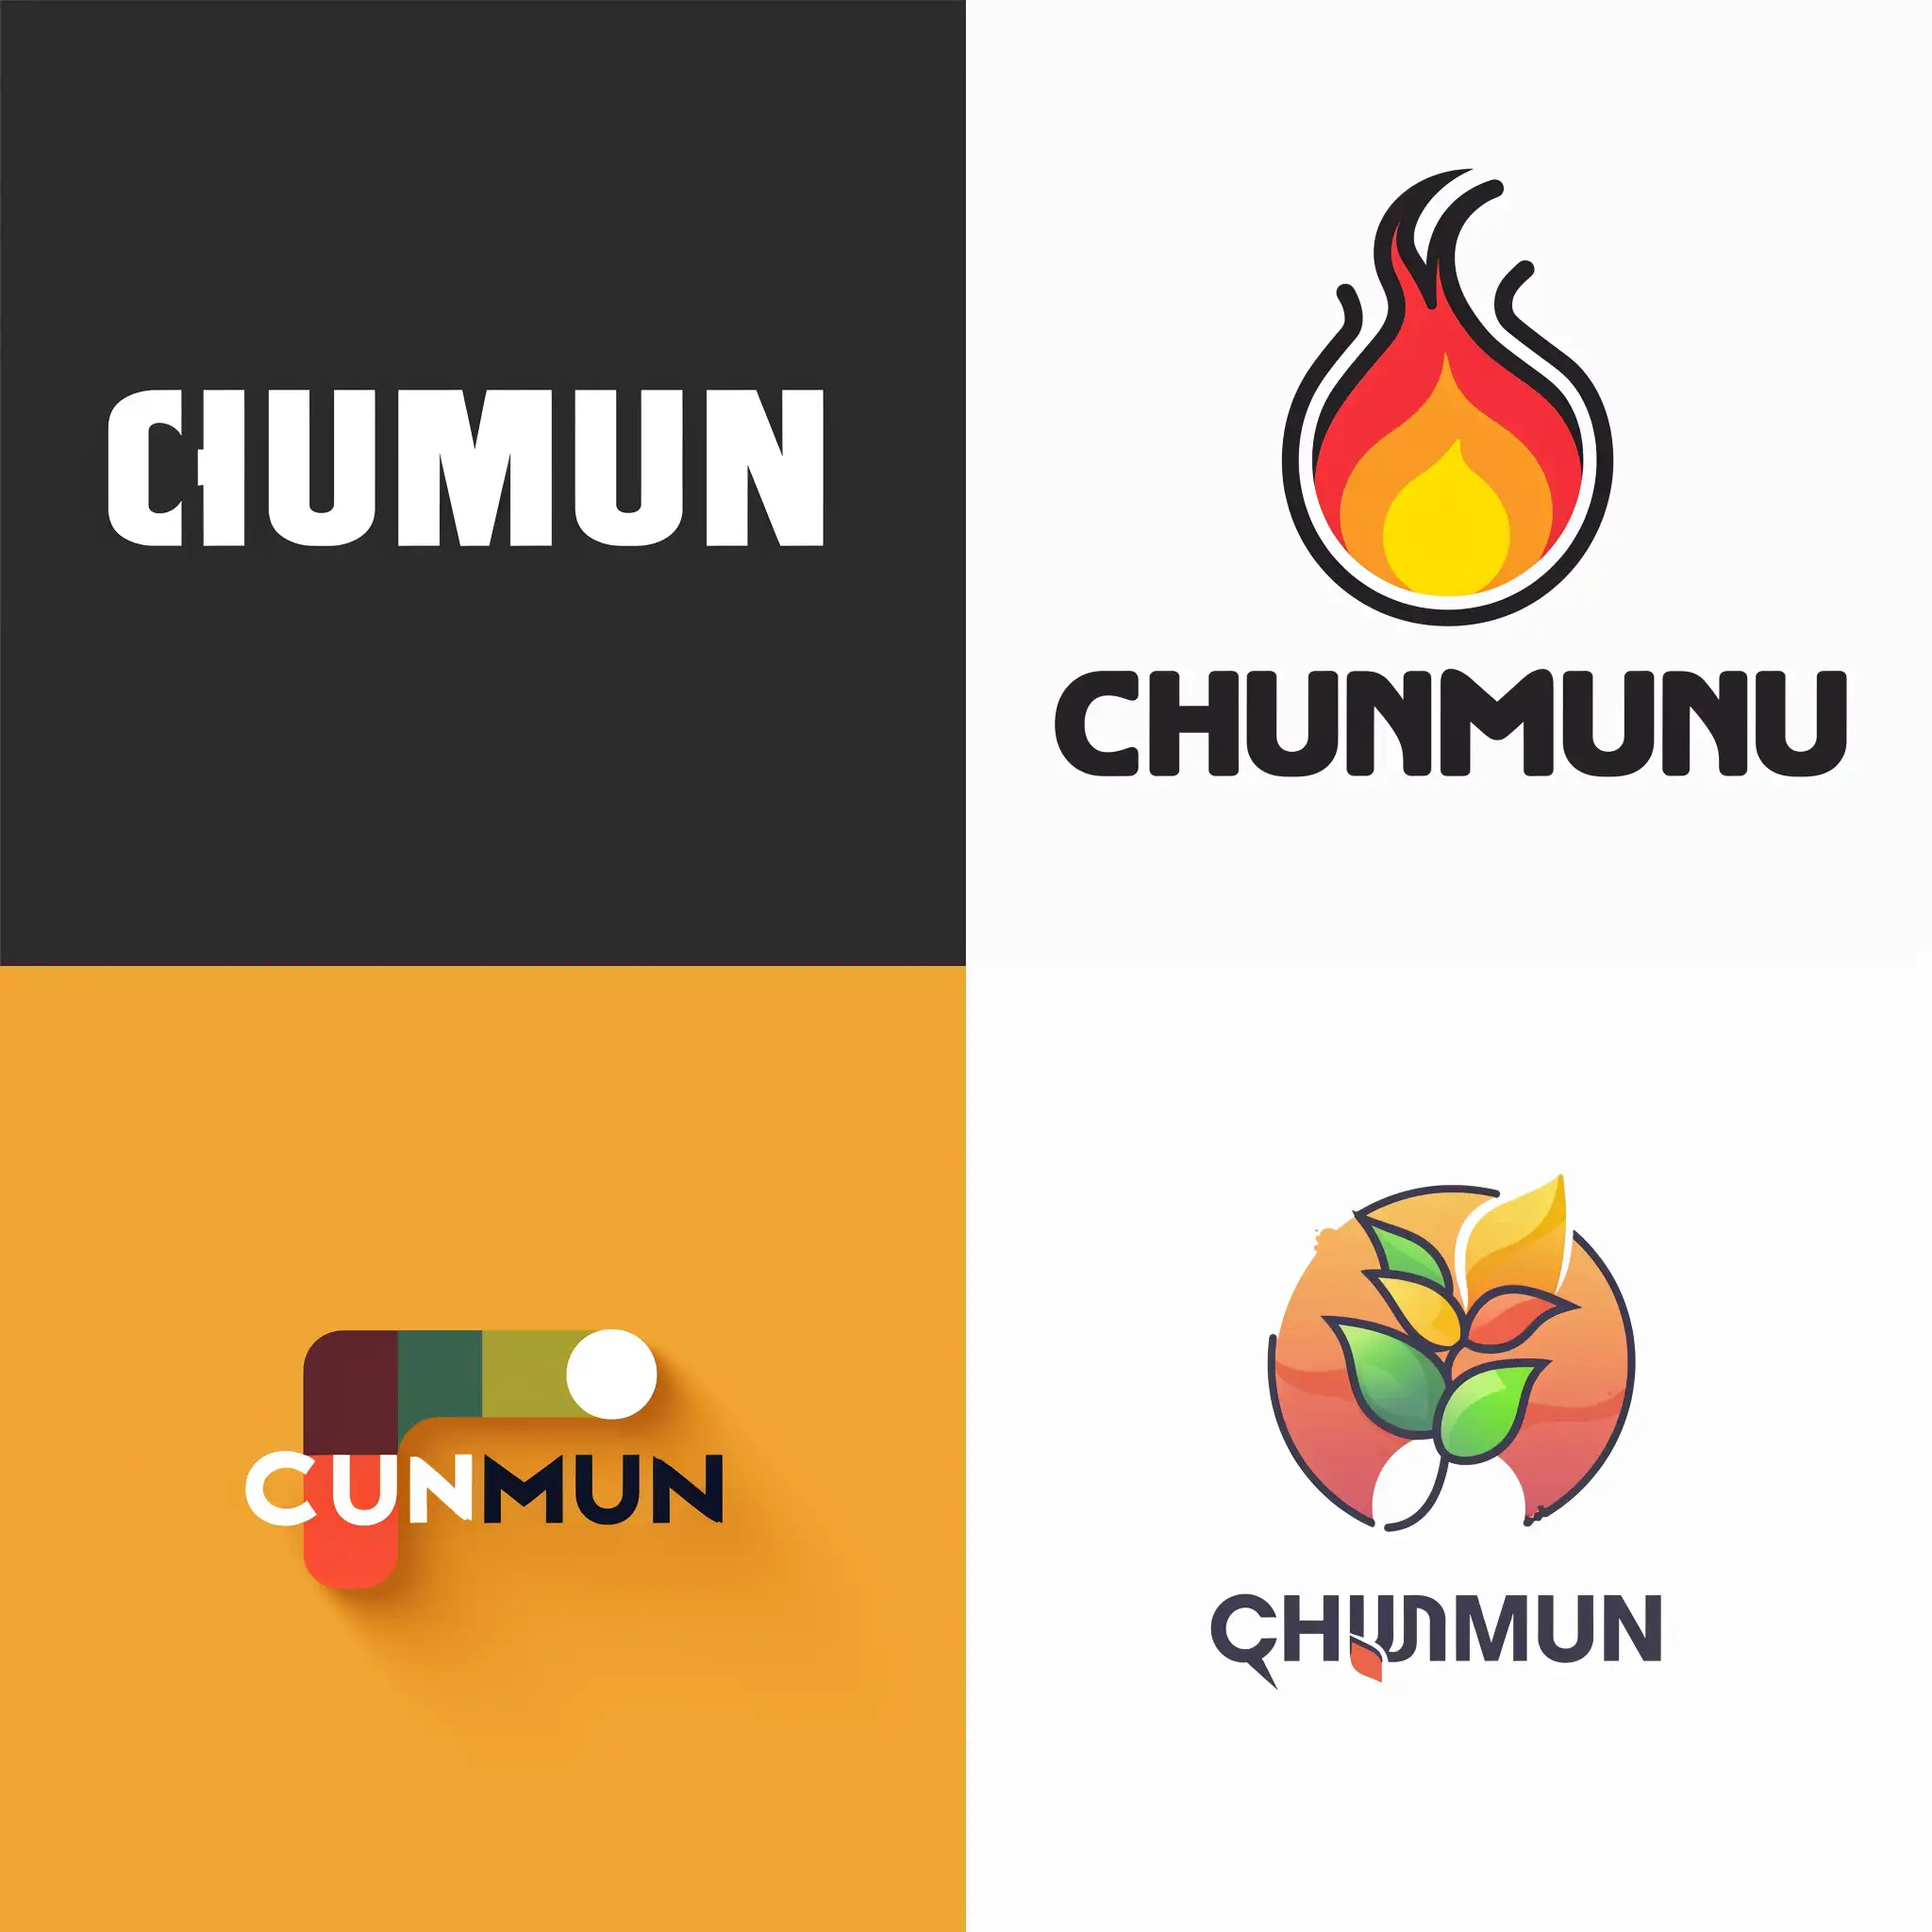 Chunmun name logo